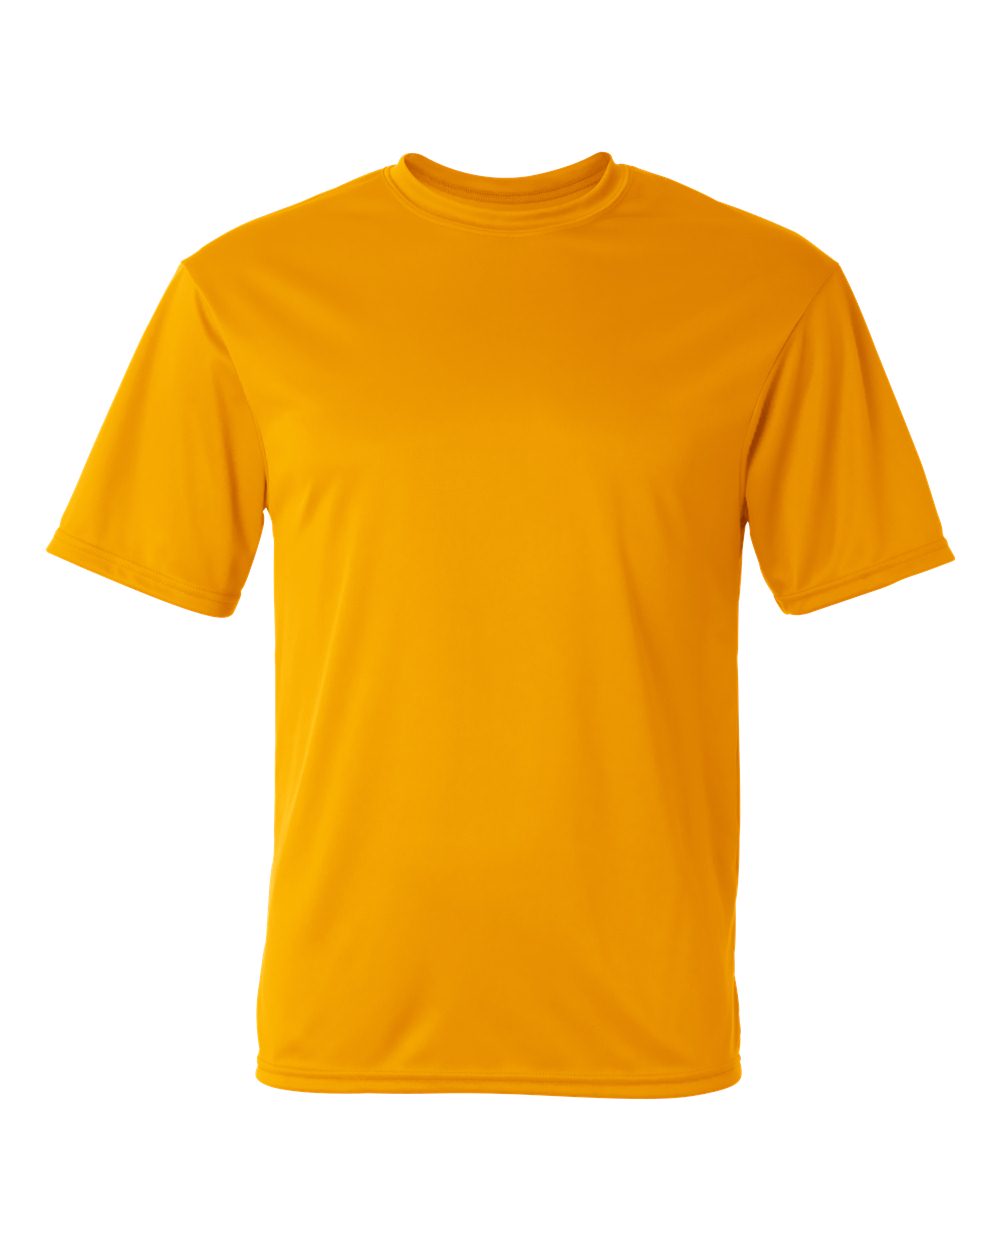 C2 Sport - Performance T-Shirt - 5100, 100% Polyester